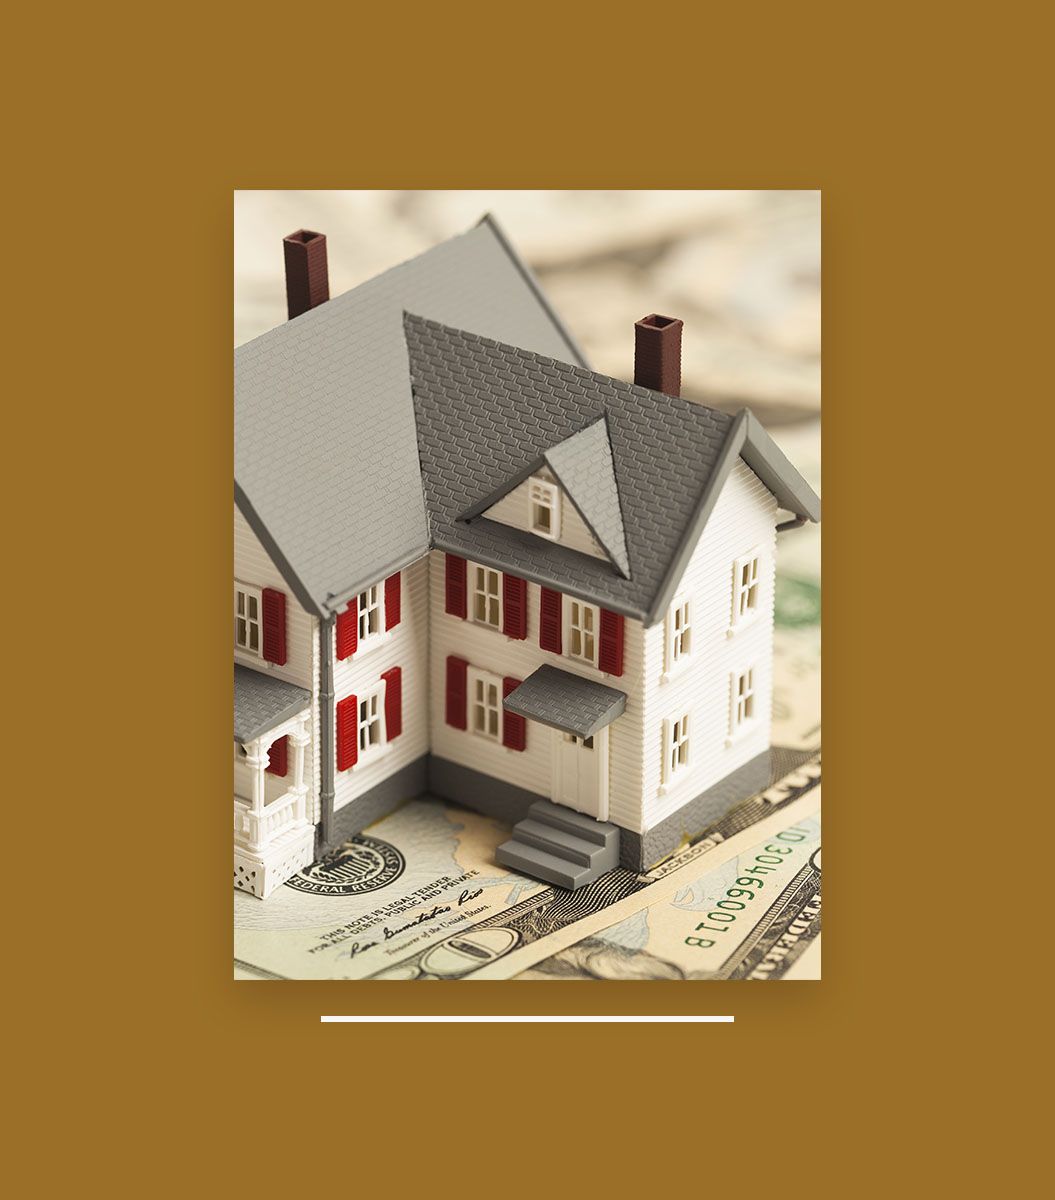 bc_selecting mortgage lender.jpg